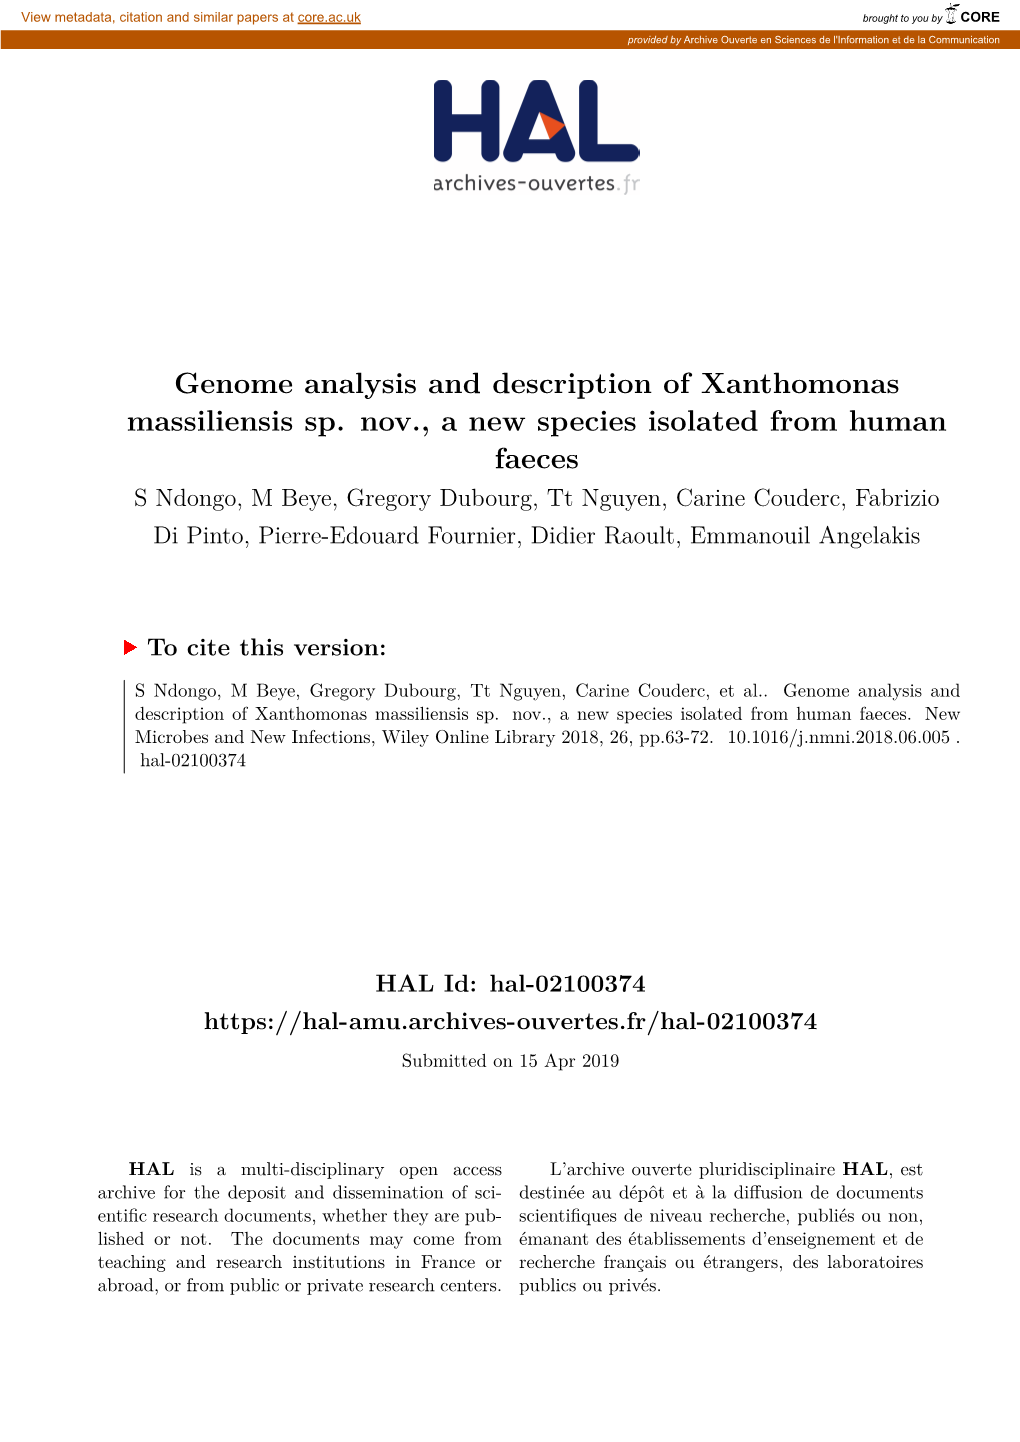 Genome Analysis and Description of Xanthomonas Massiliensis Sp. Nov